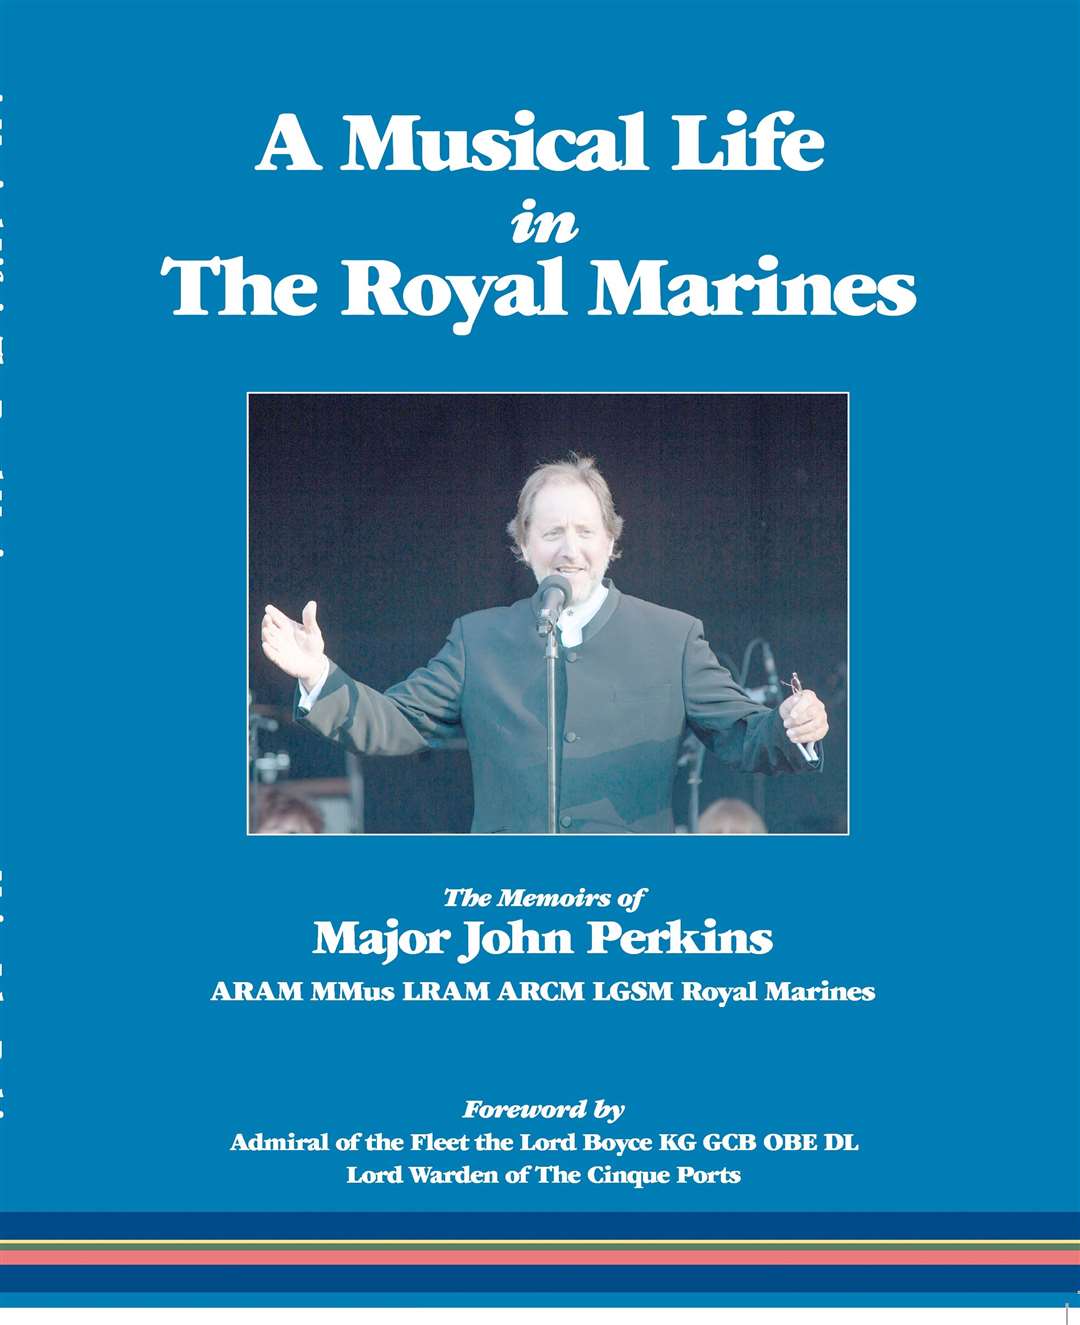 Major John Perkins has released an autobiography